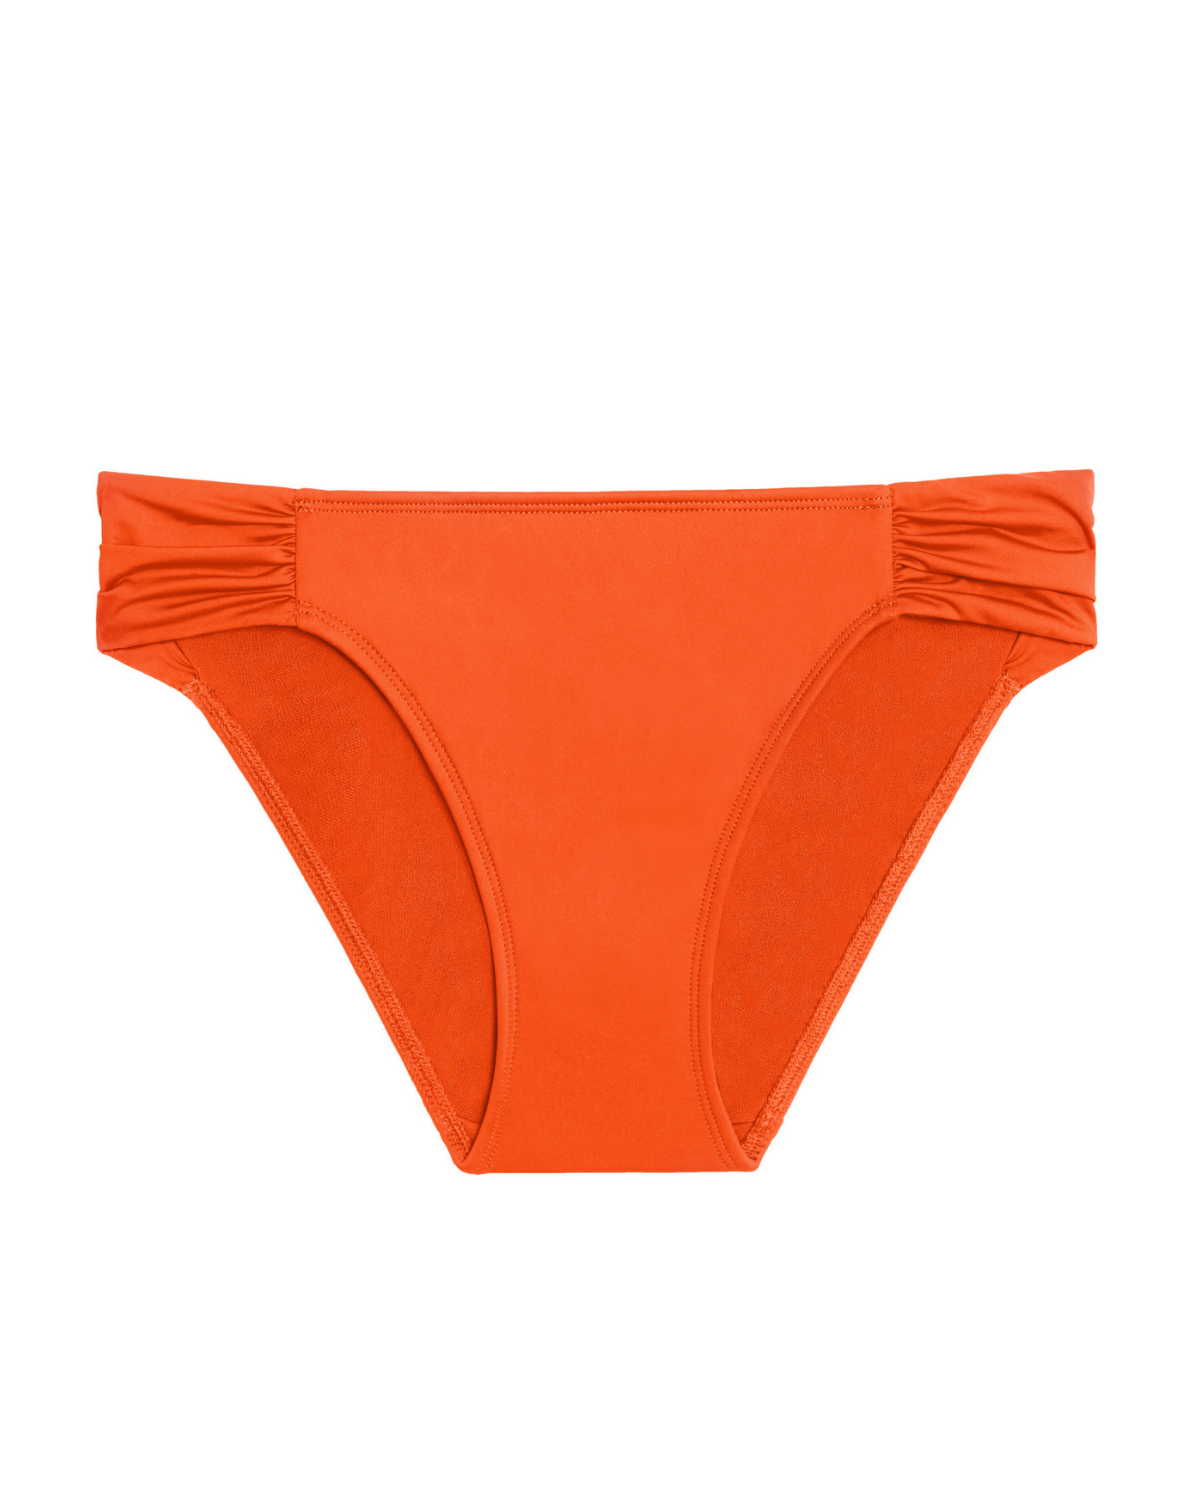 Flat lay of a tab side hipster bikini bottom in orange